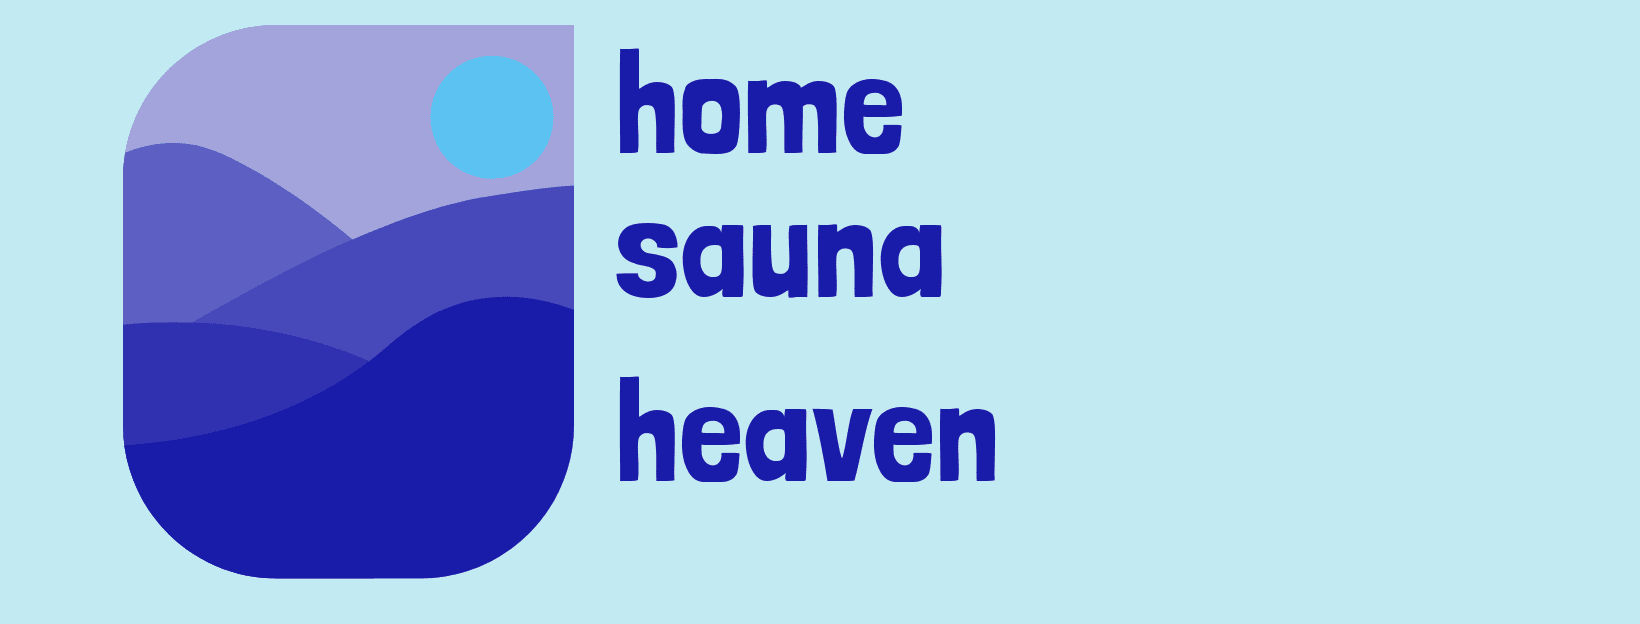 home sauna heaven - company logo